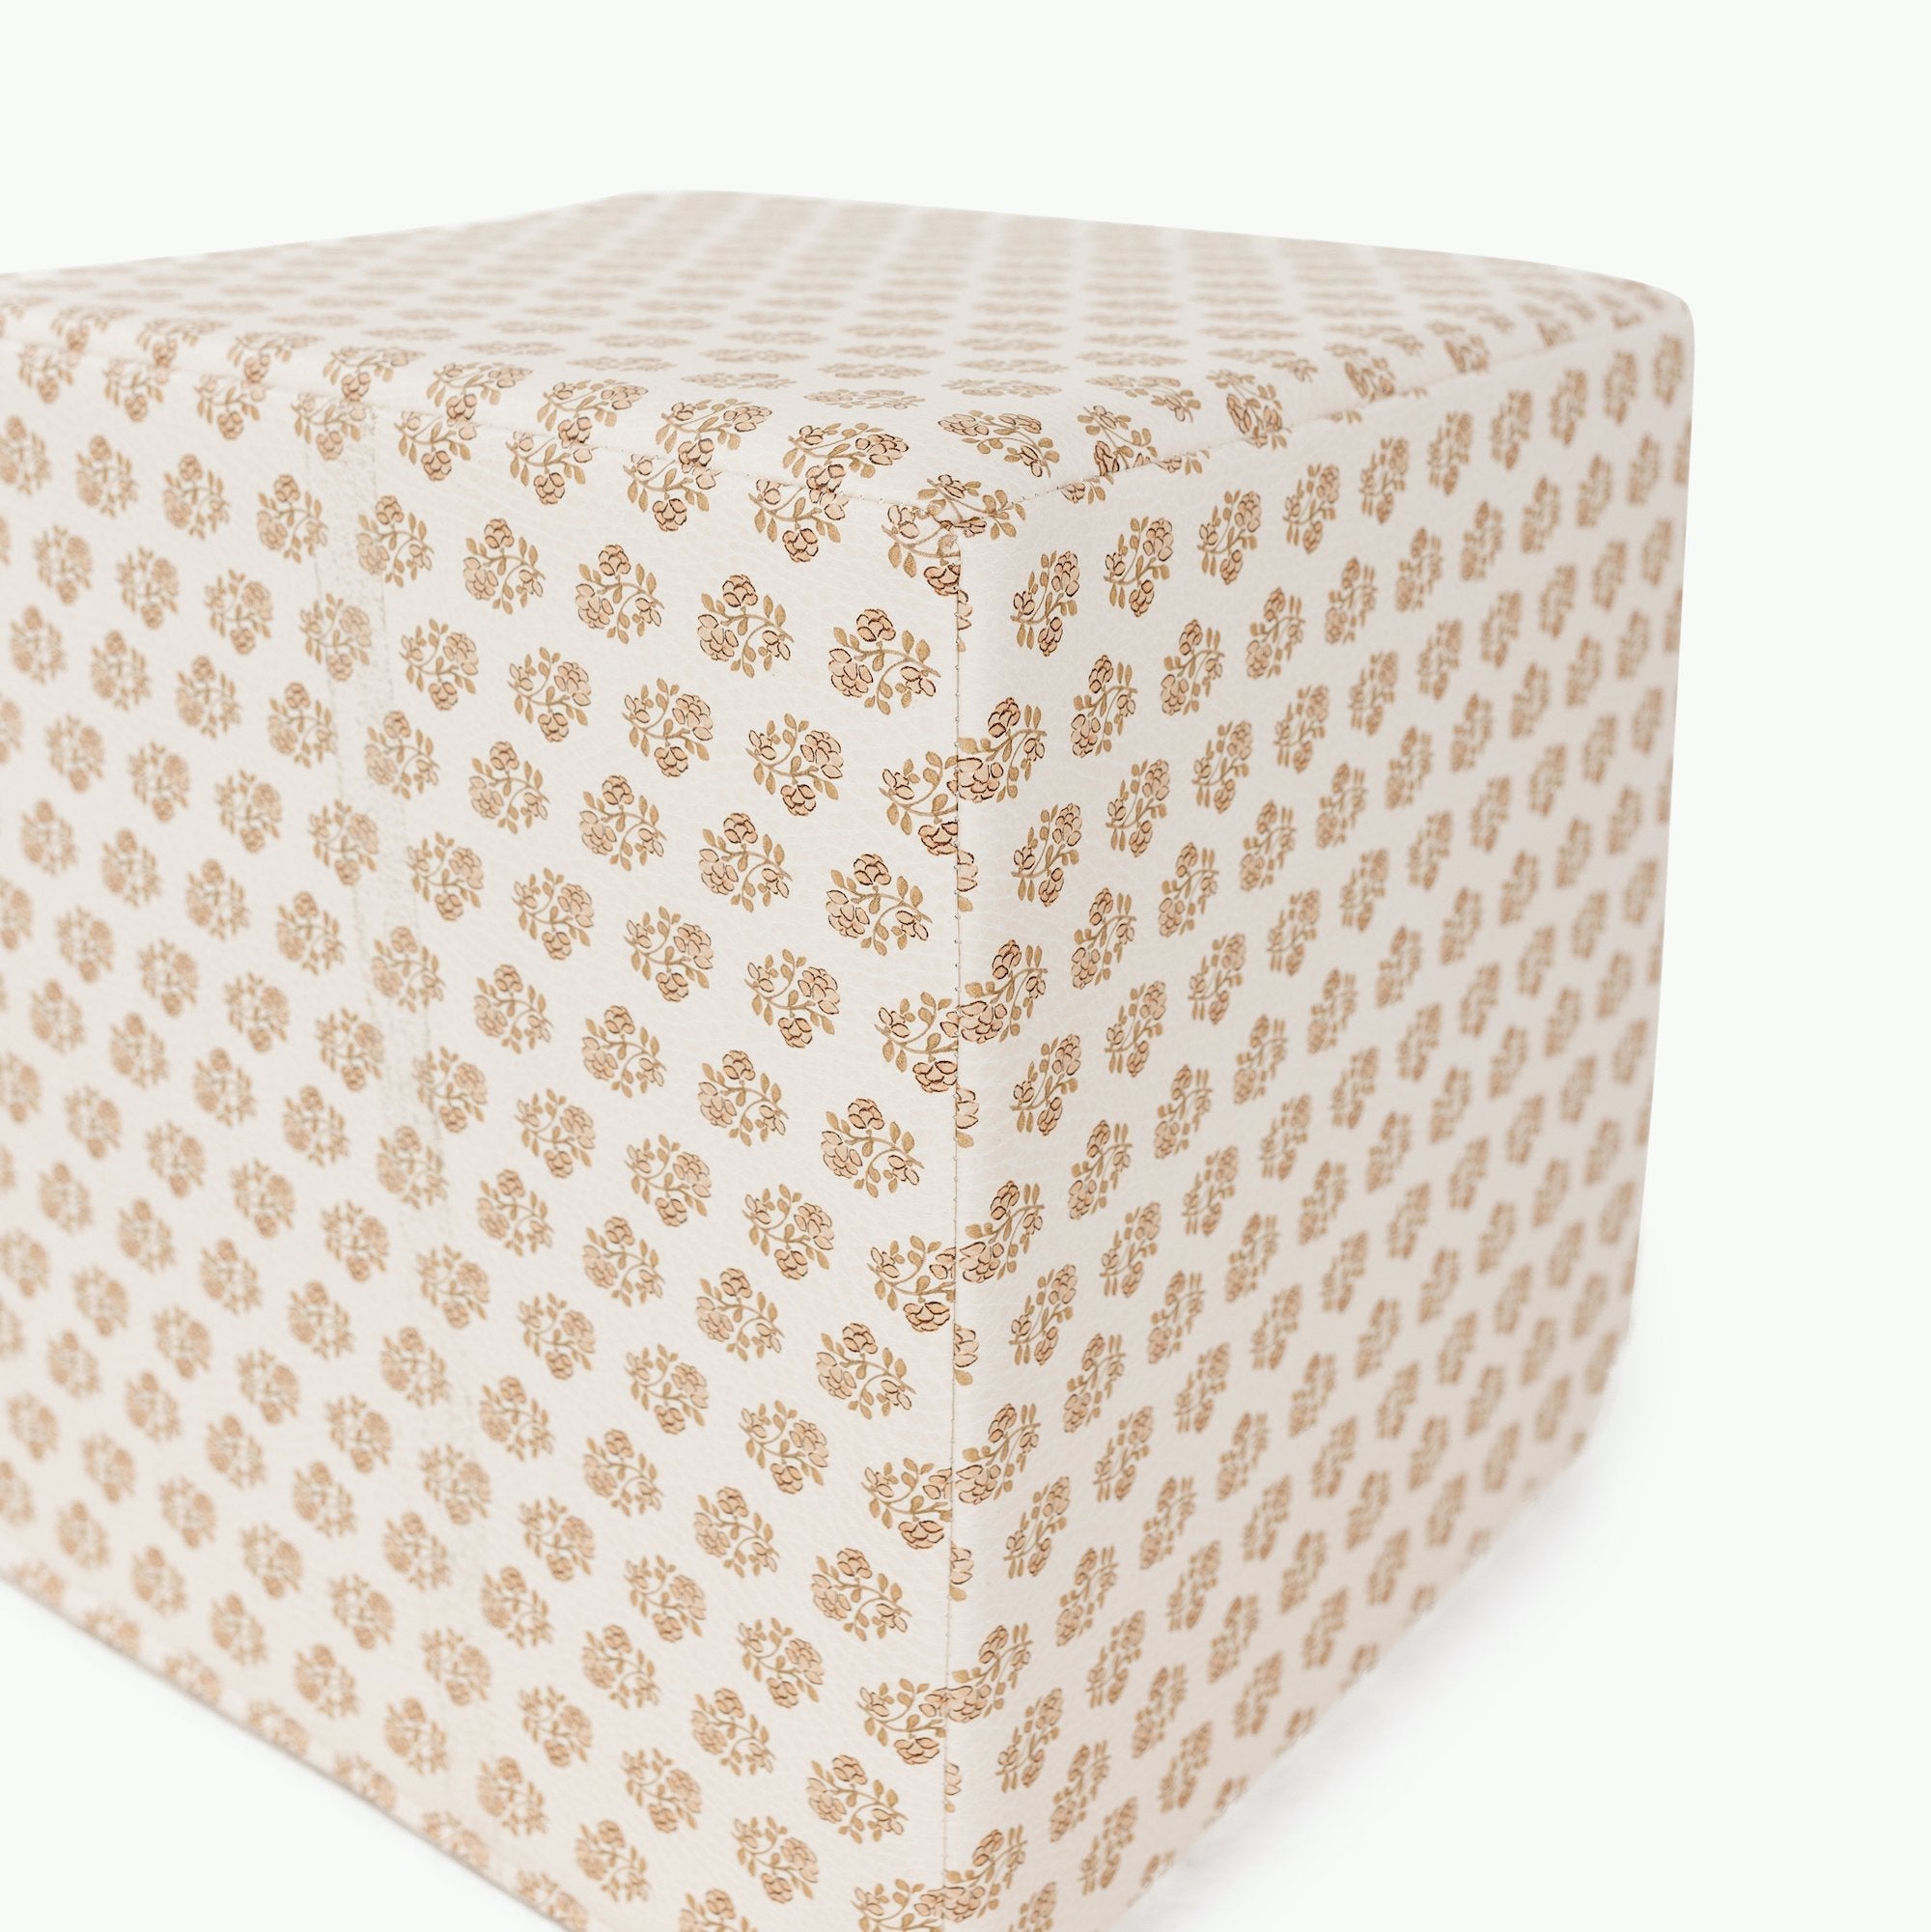 Pomelo (on sale)@Detail of Pomelo Cube